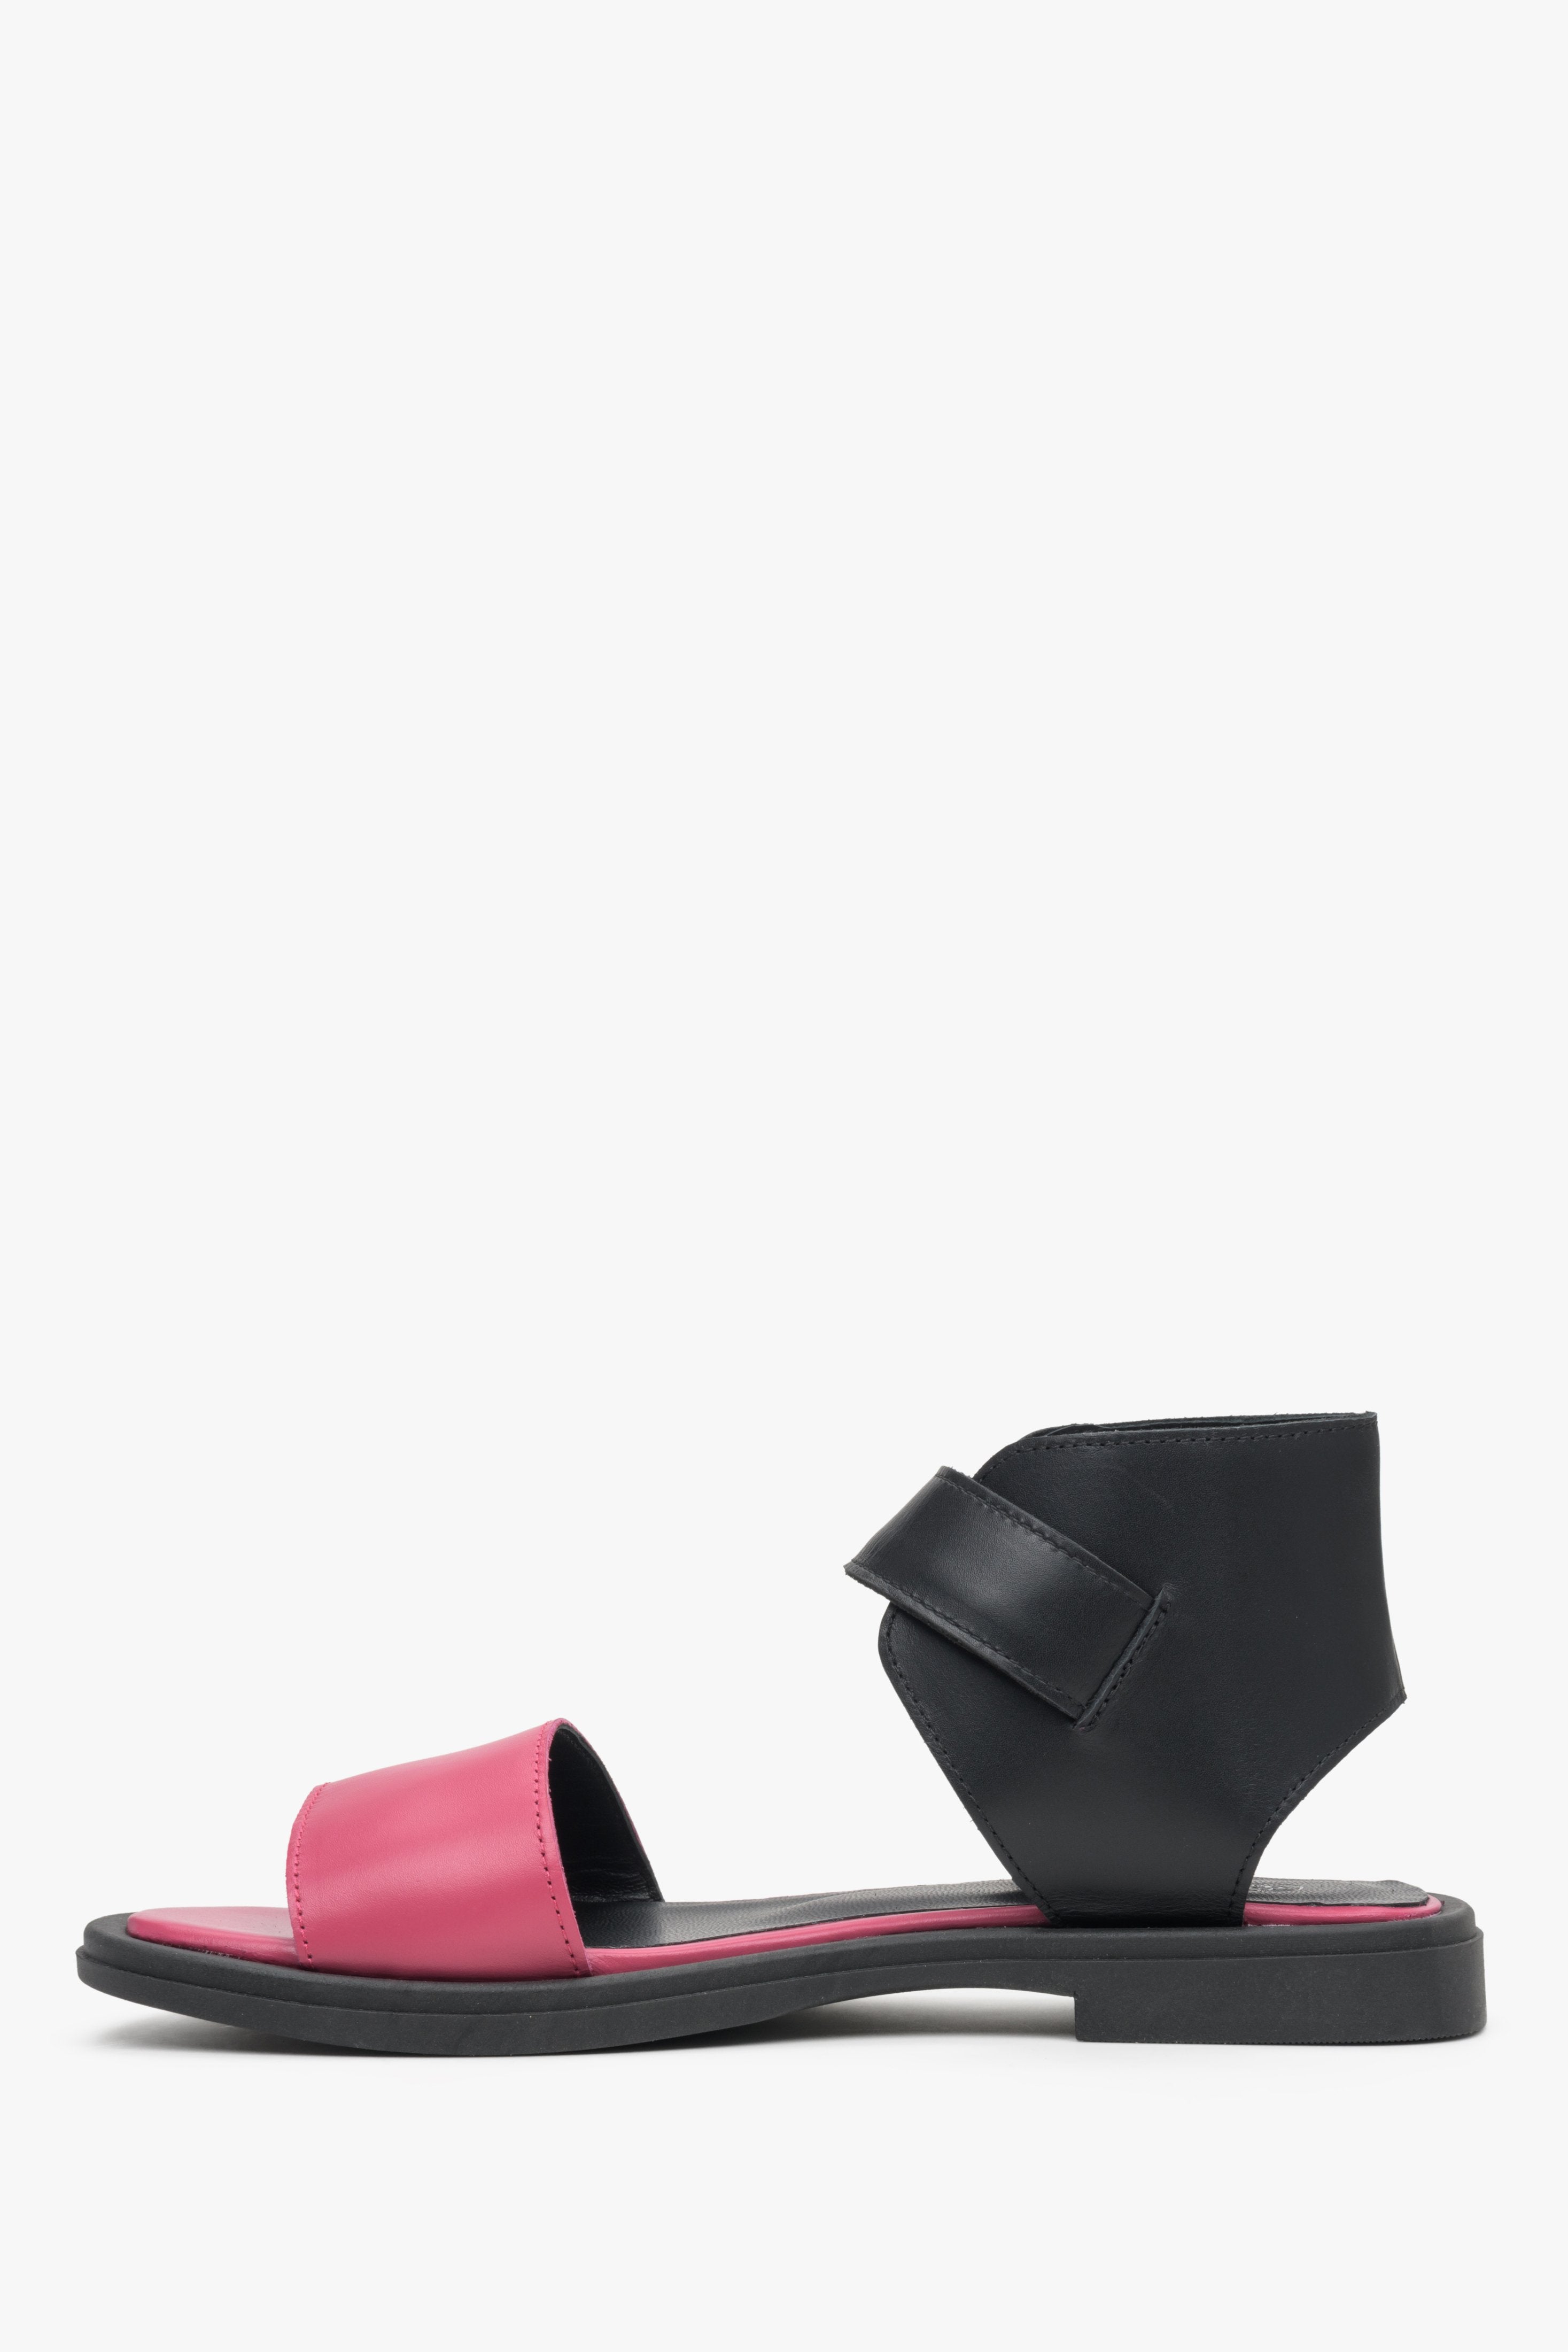 Sandały damskie czarno-różowe Estro ze skóry naturalnej - profil buta.